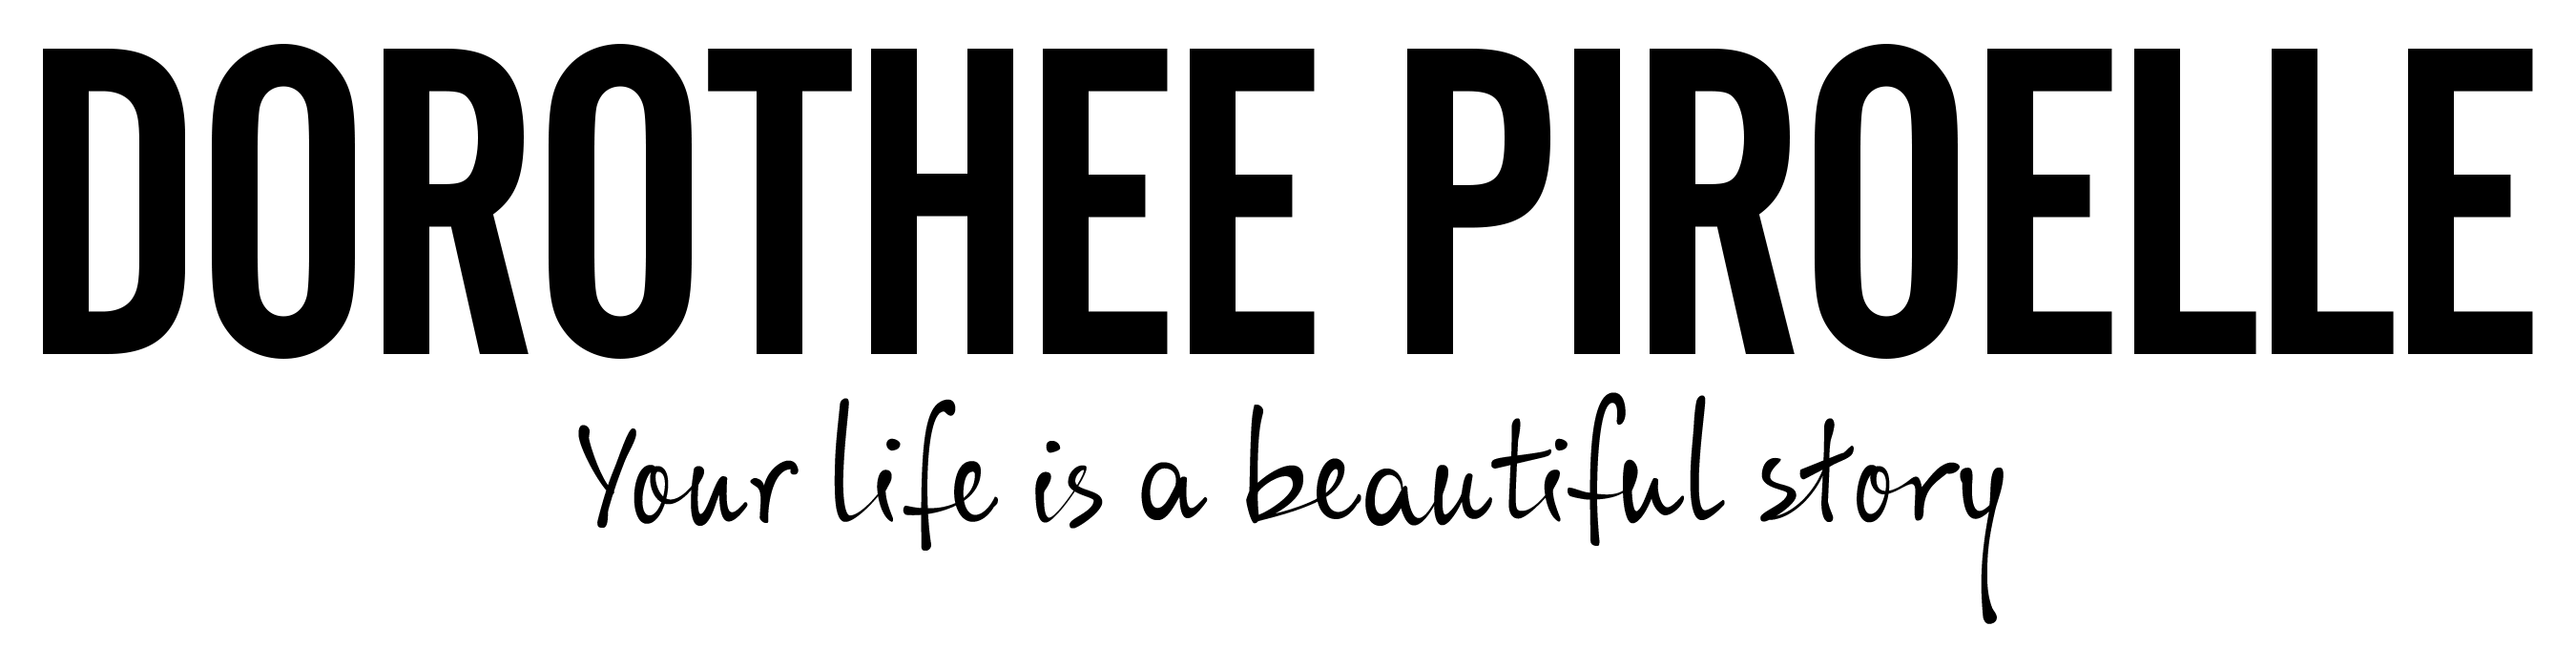 Dorothee Piroelle Photographie Logo